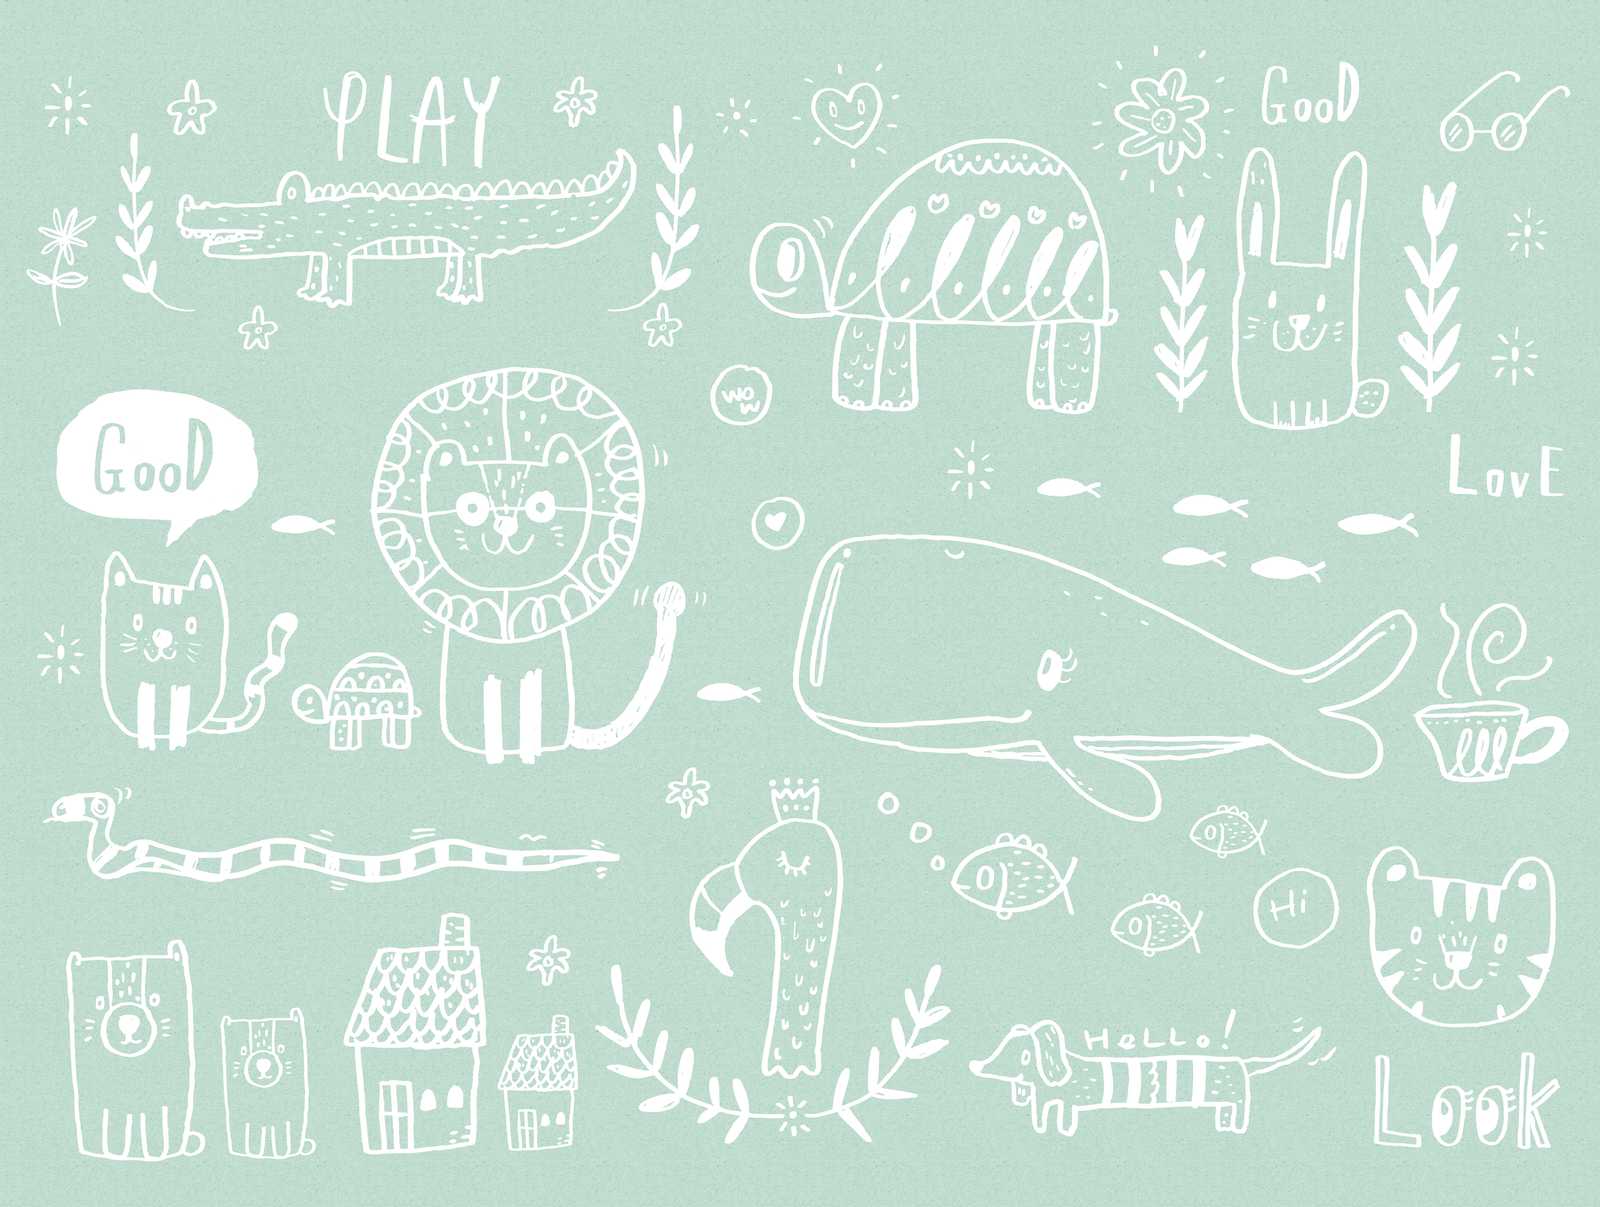             Wallpaper novelty - Nursery motif wallpaper doodle animals, mint green
        